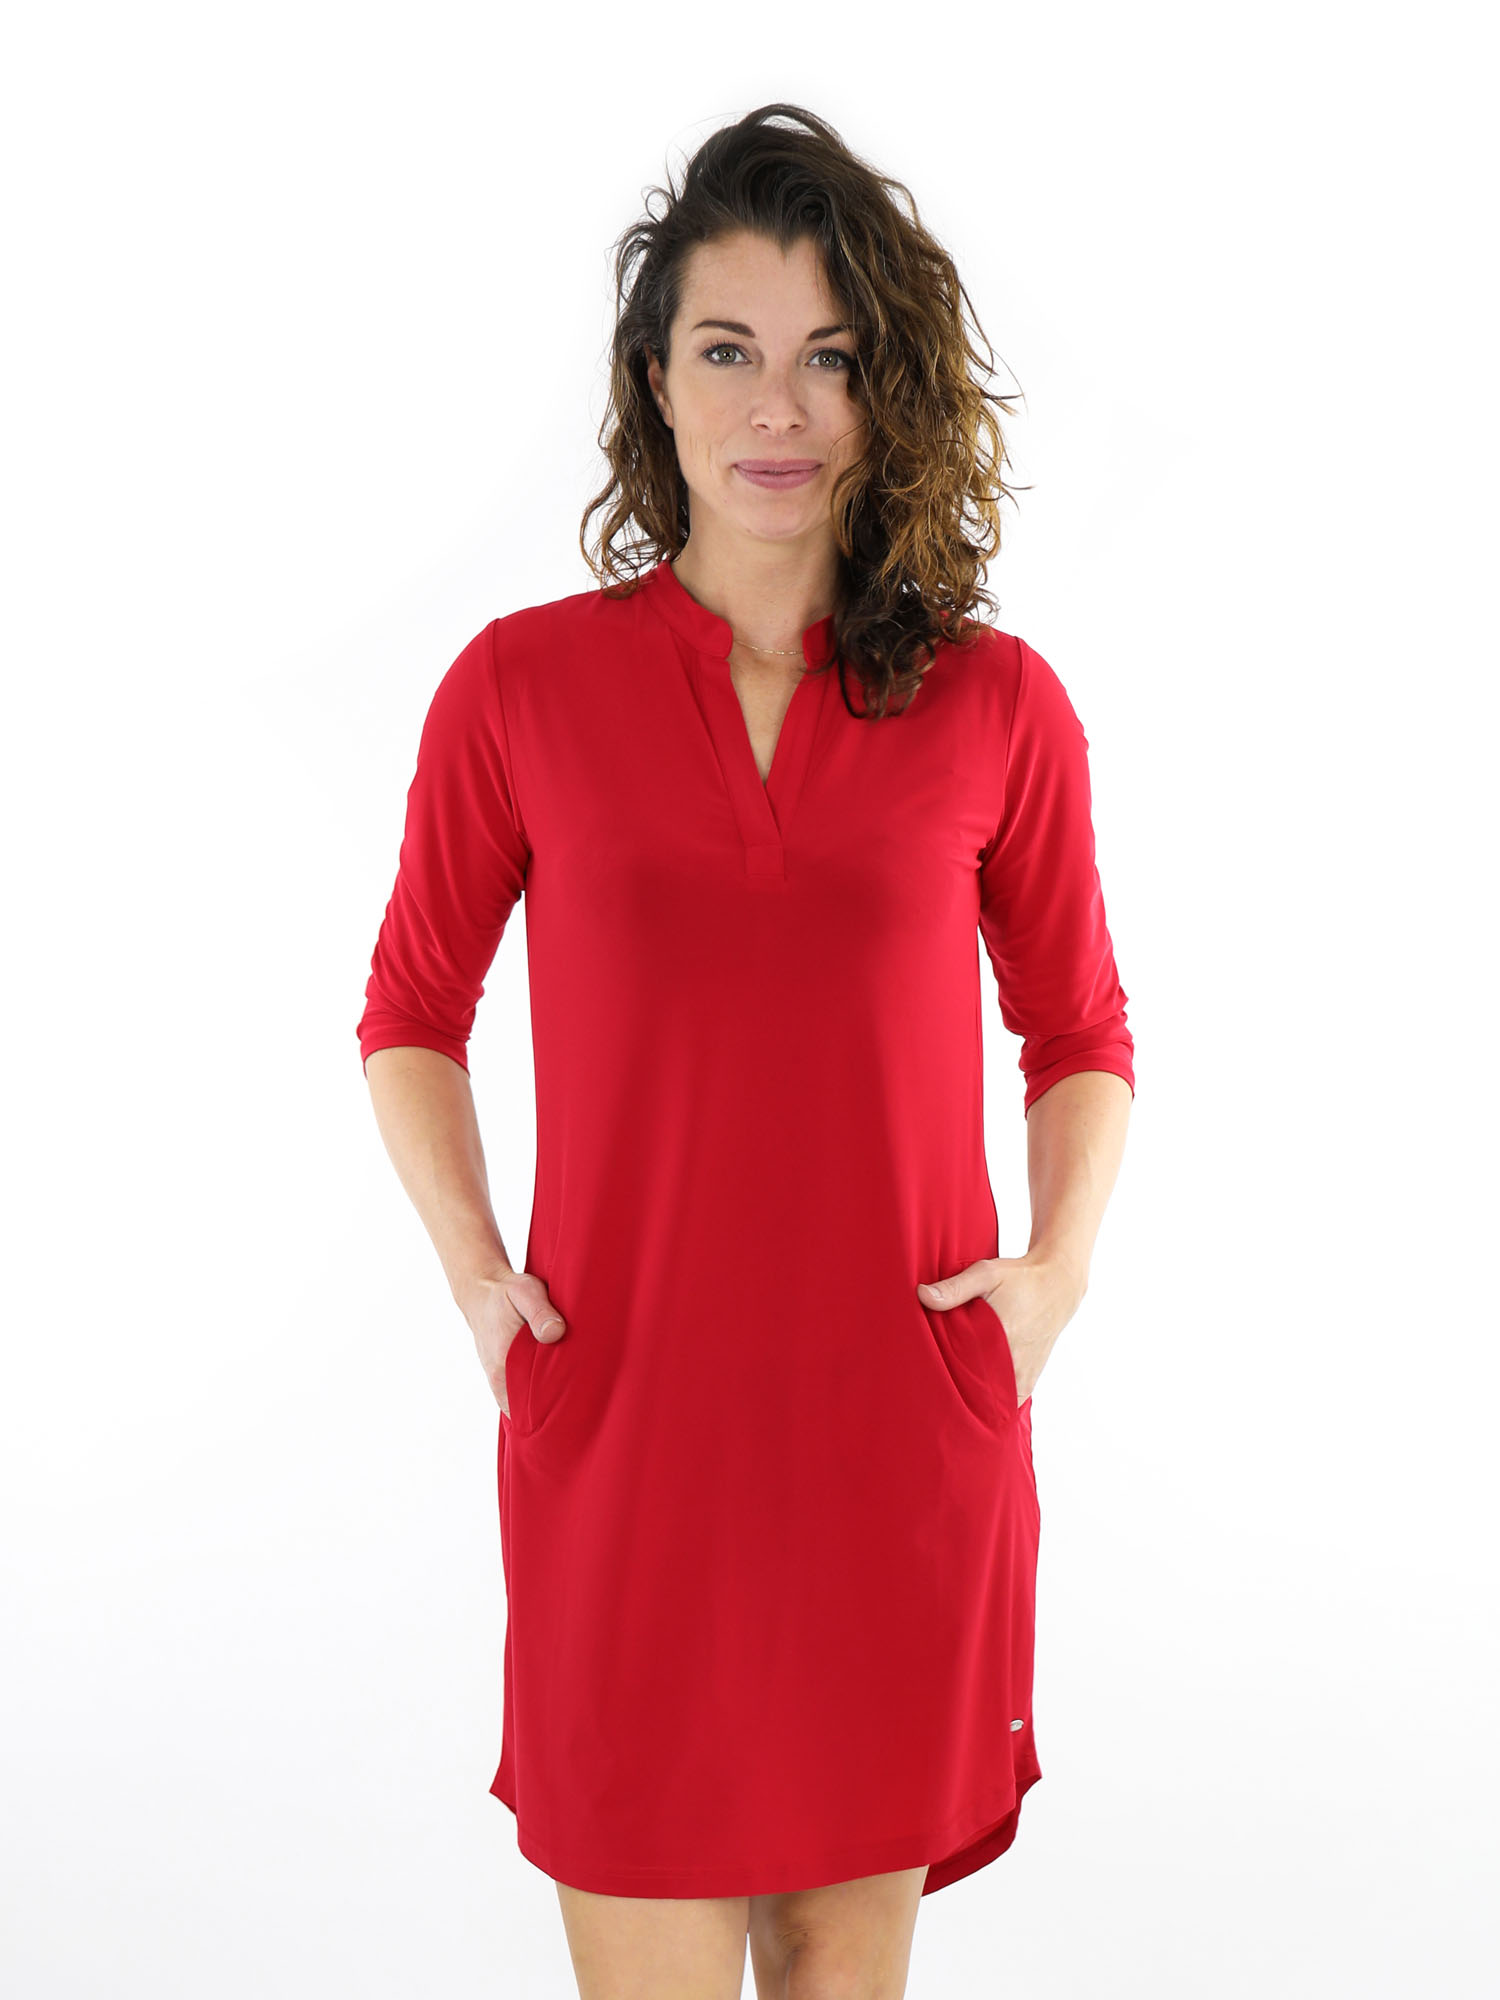 Tot stand brengen Bloesem walgelijk Rode travelstof jurk/tuniek van Angelle Milan bij Fashion to Fashion